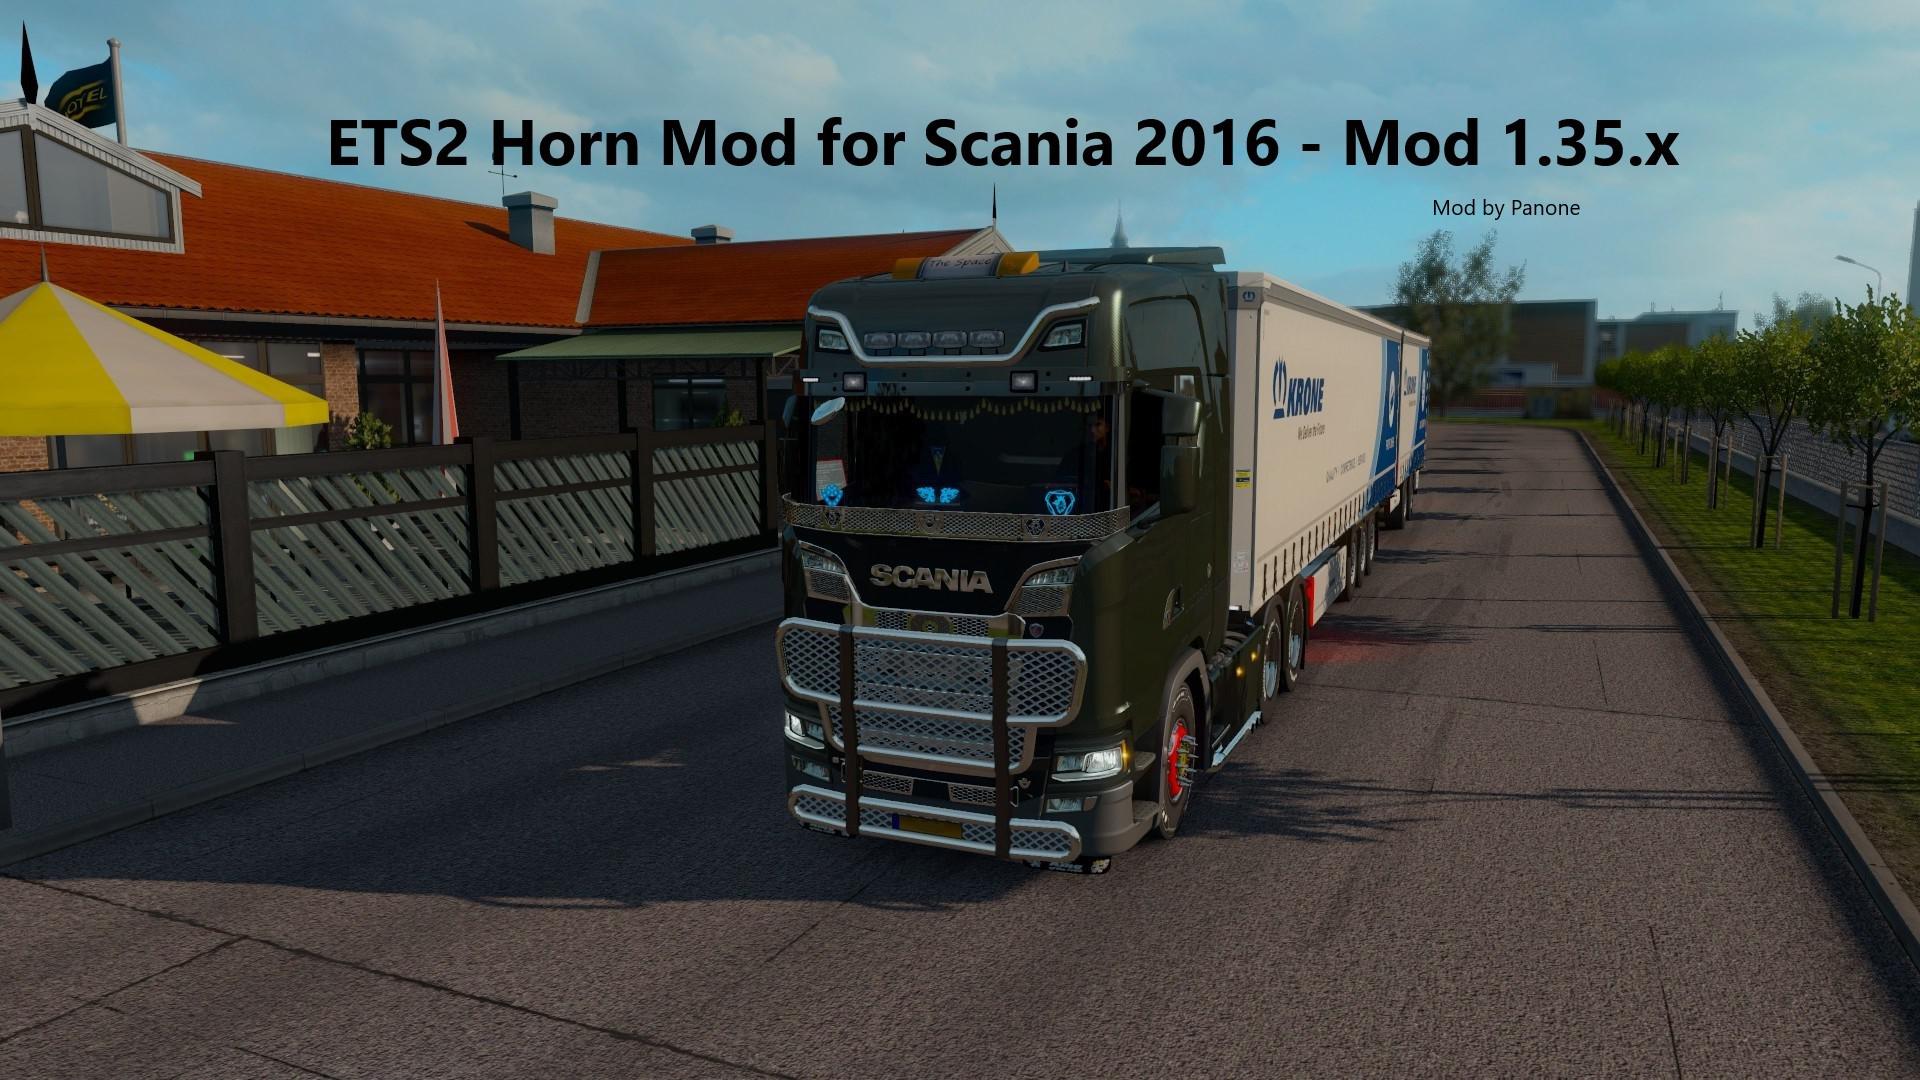 Horn Mod for Scania 2016 - ETS2 1.35 v1.0